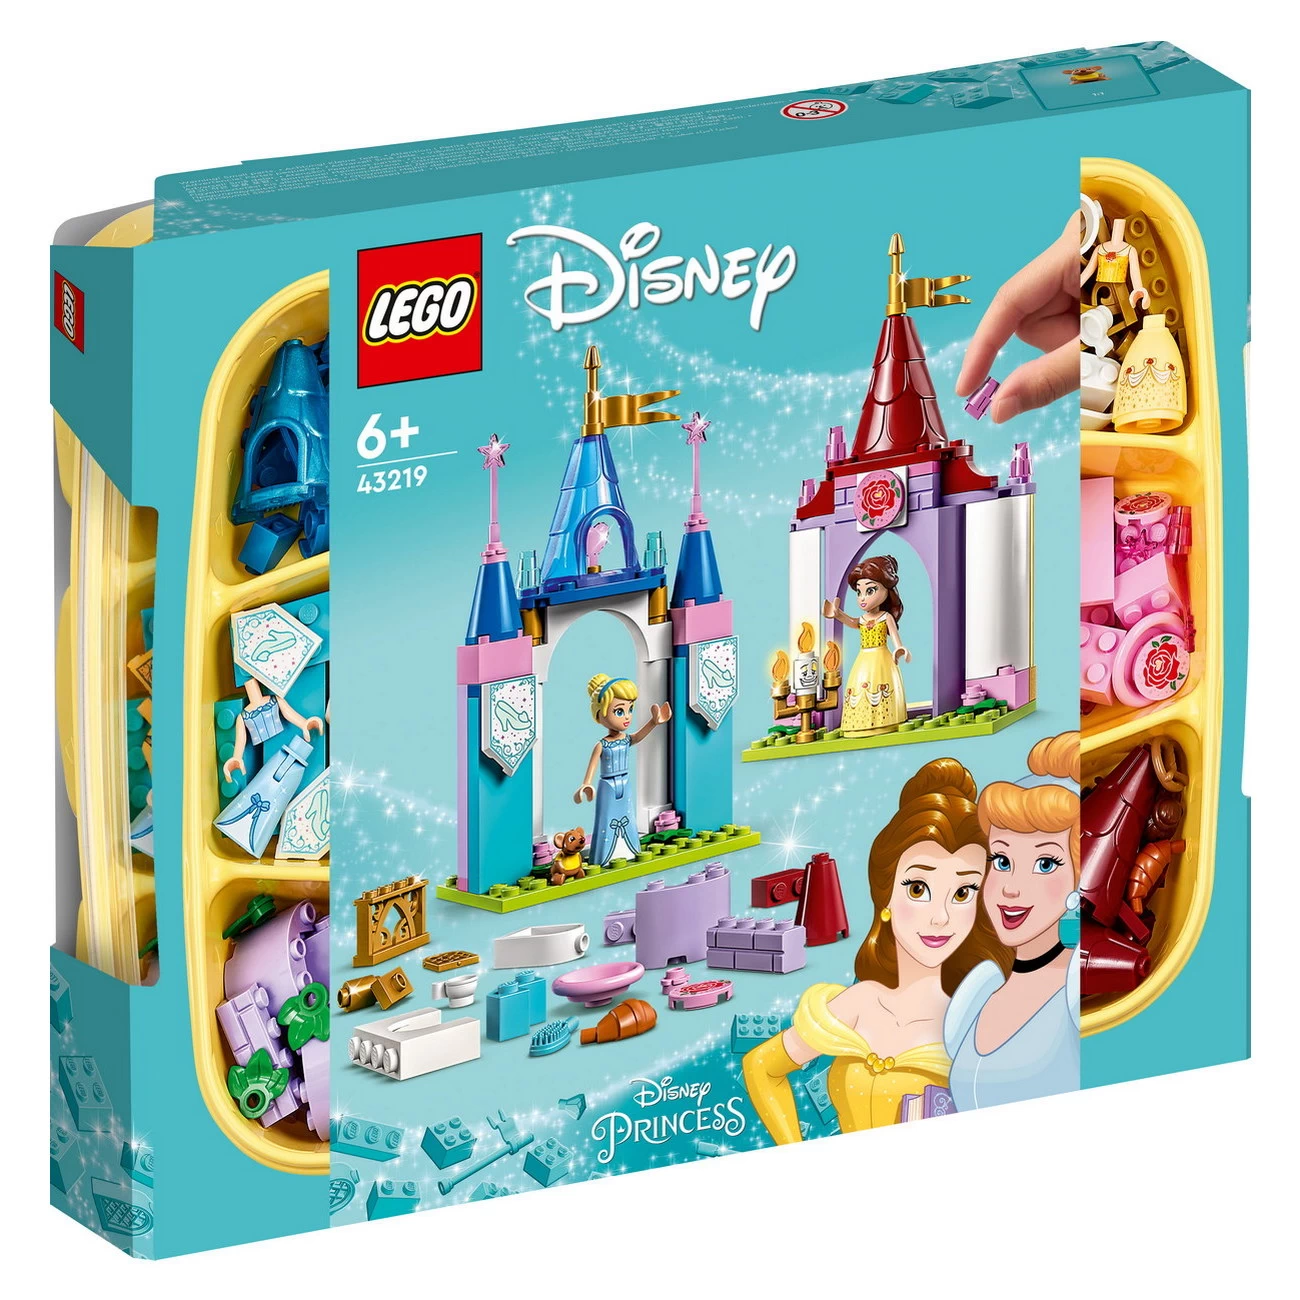 LEGO Disney Princess 43219 - Kreative Schlösserbox